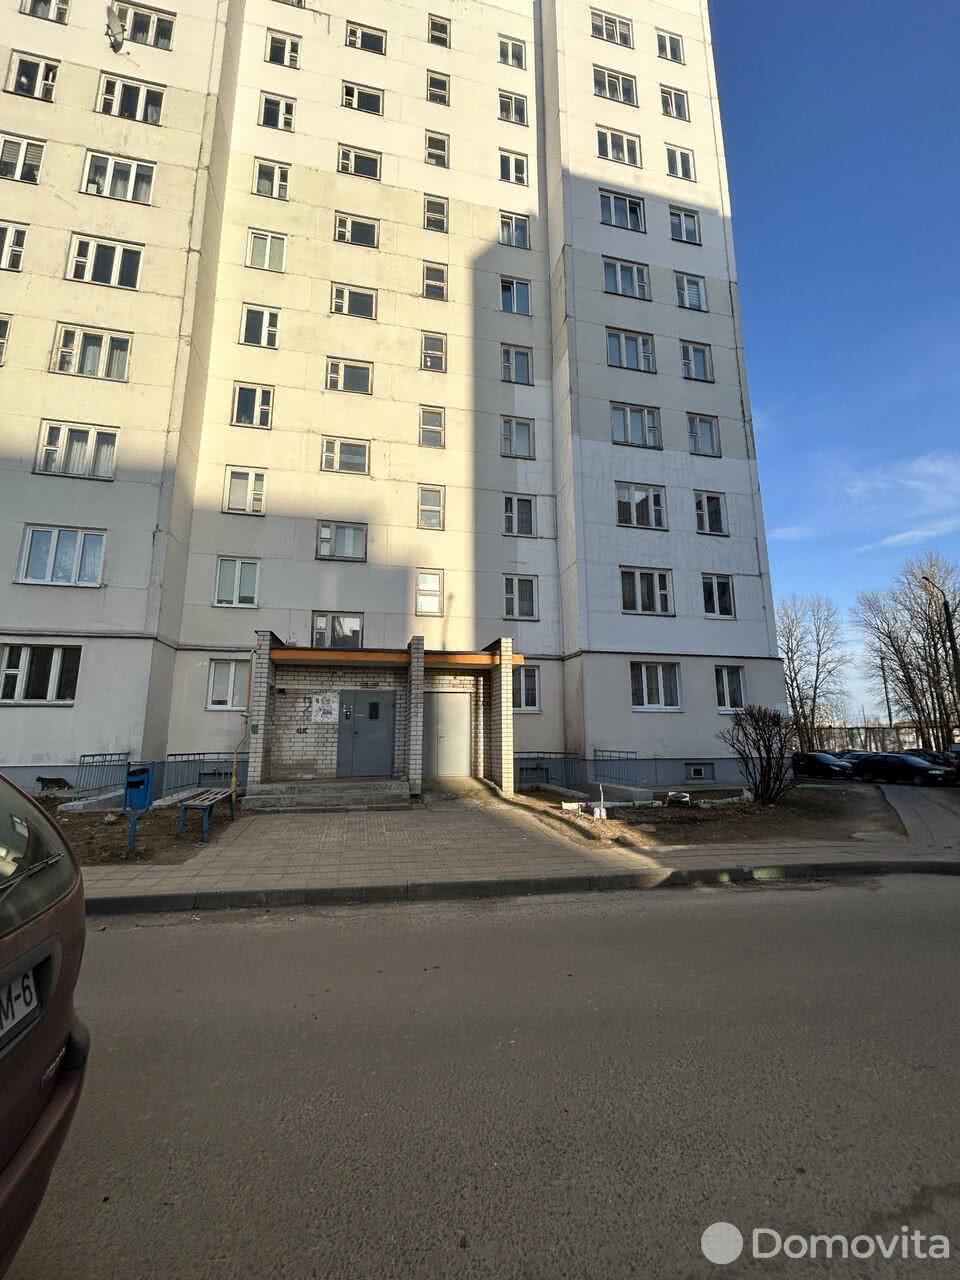 квартира, Могилев, ул. Криулина, д. 8/А, стоимость продажи 124 149 р.